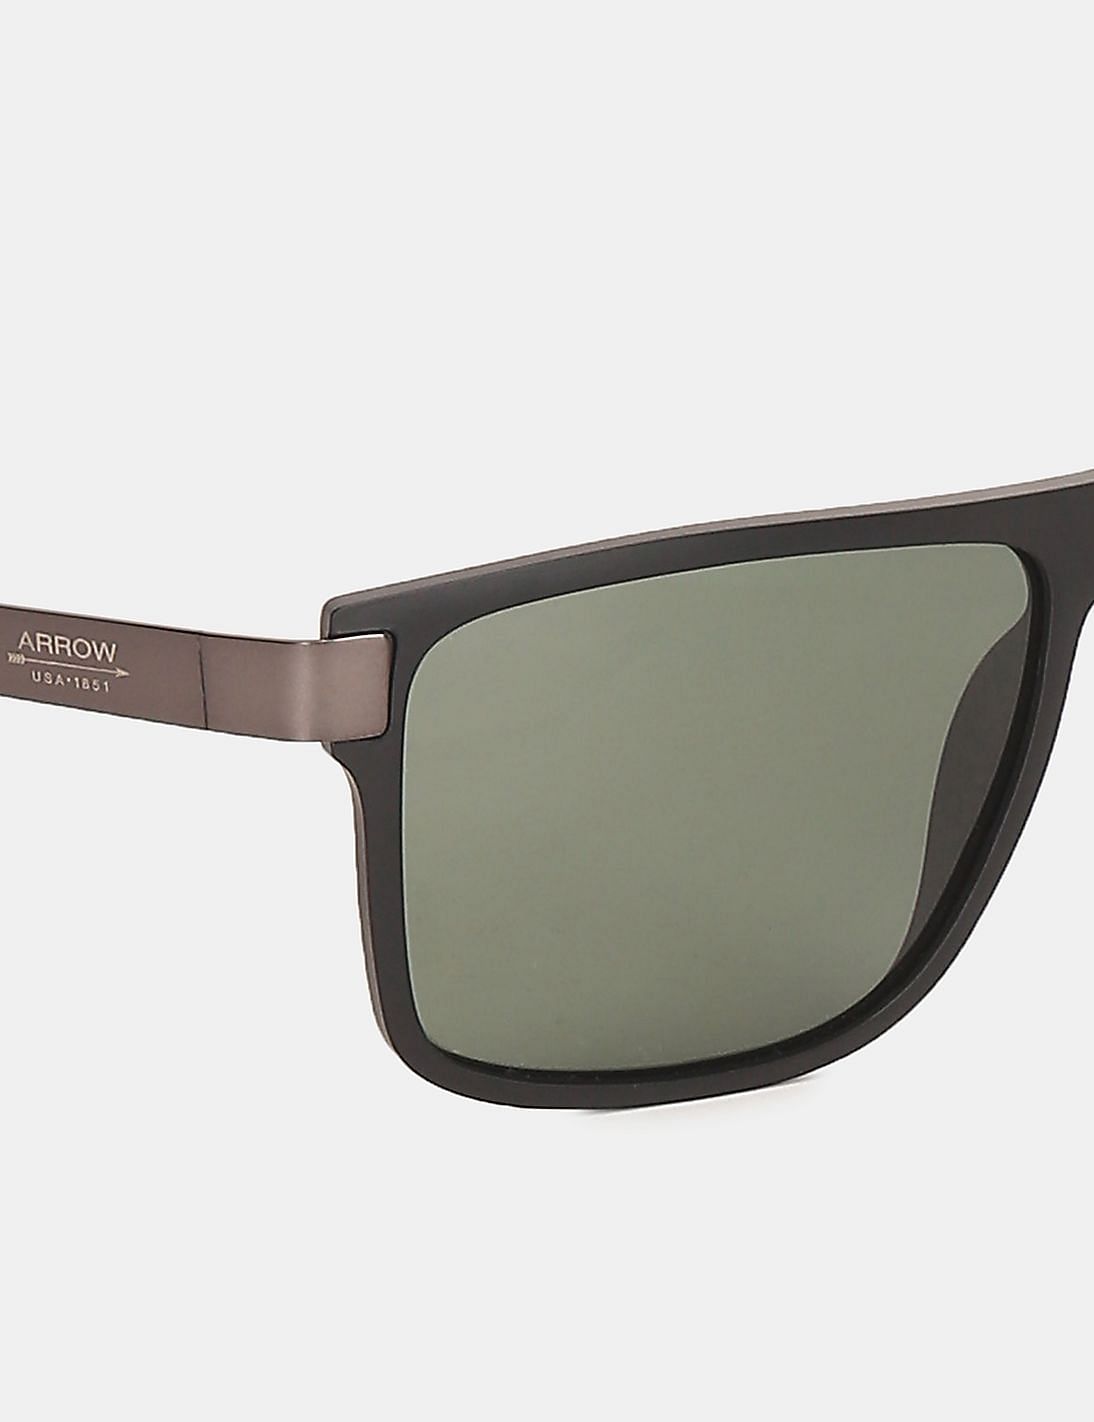 Buy ARROW Wayfarer Sunglasses Black For Men Online @ Best Prices in India |  Flipkart.com